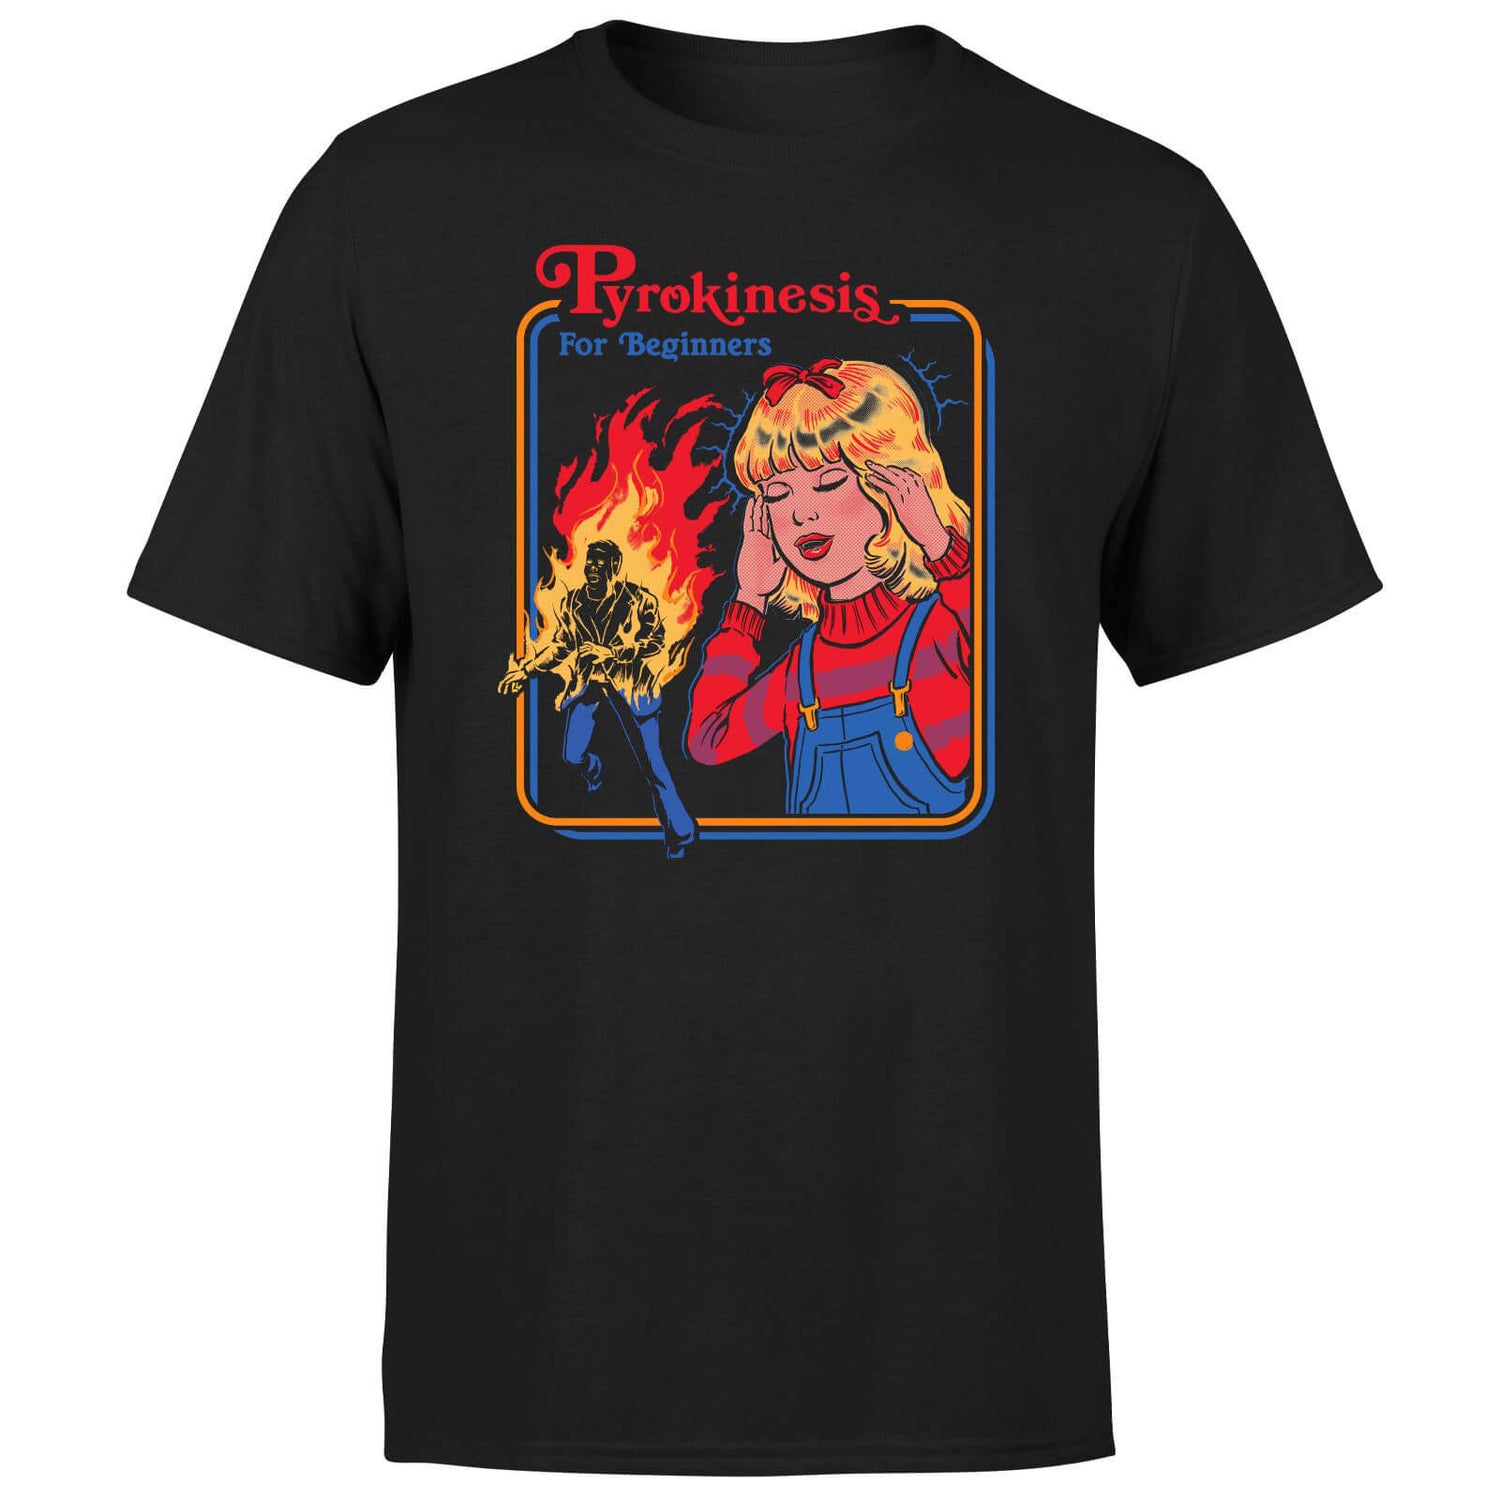 Pyrokinesis For Beginners Men's T-Shirt - Black